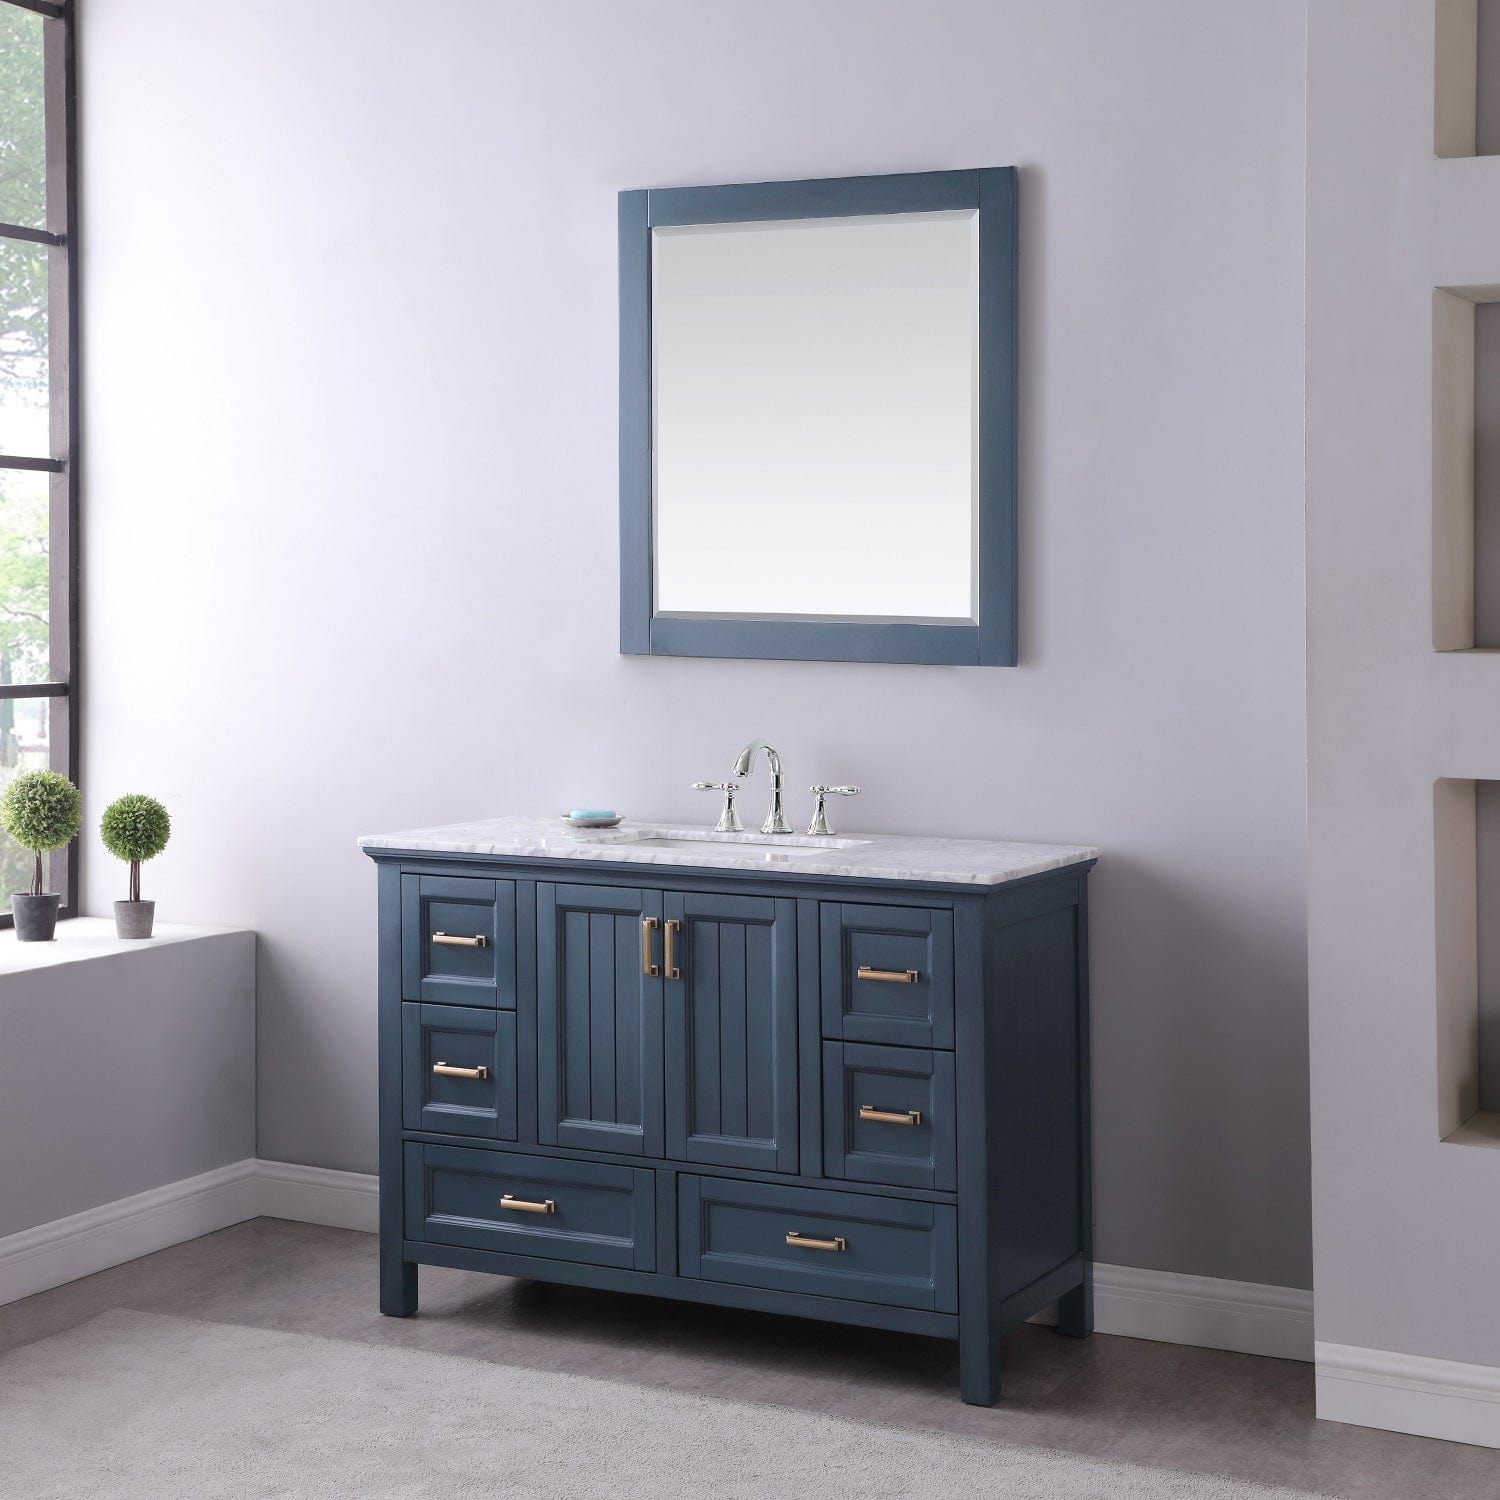 Altair Isla 48" Single Bathroom Vanity Set in Classic Blue and Carrara White Marble Countertop with Mirror 538048-CB-CA - Molaix631112970853Vanity538048-CB-CA